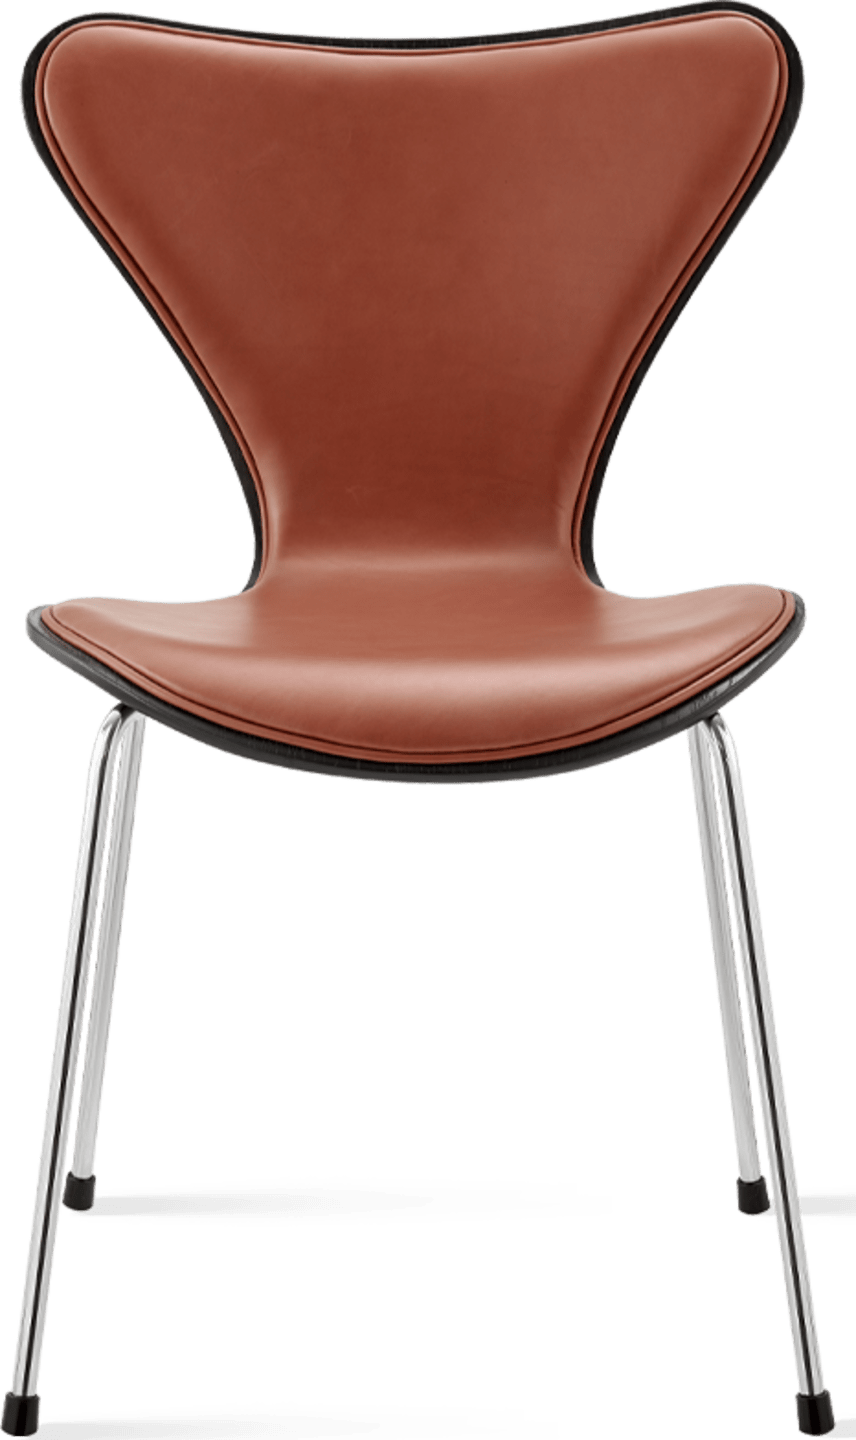 Series 7 Chair - Half Upholstered Premium Leather/Dark Tan image.